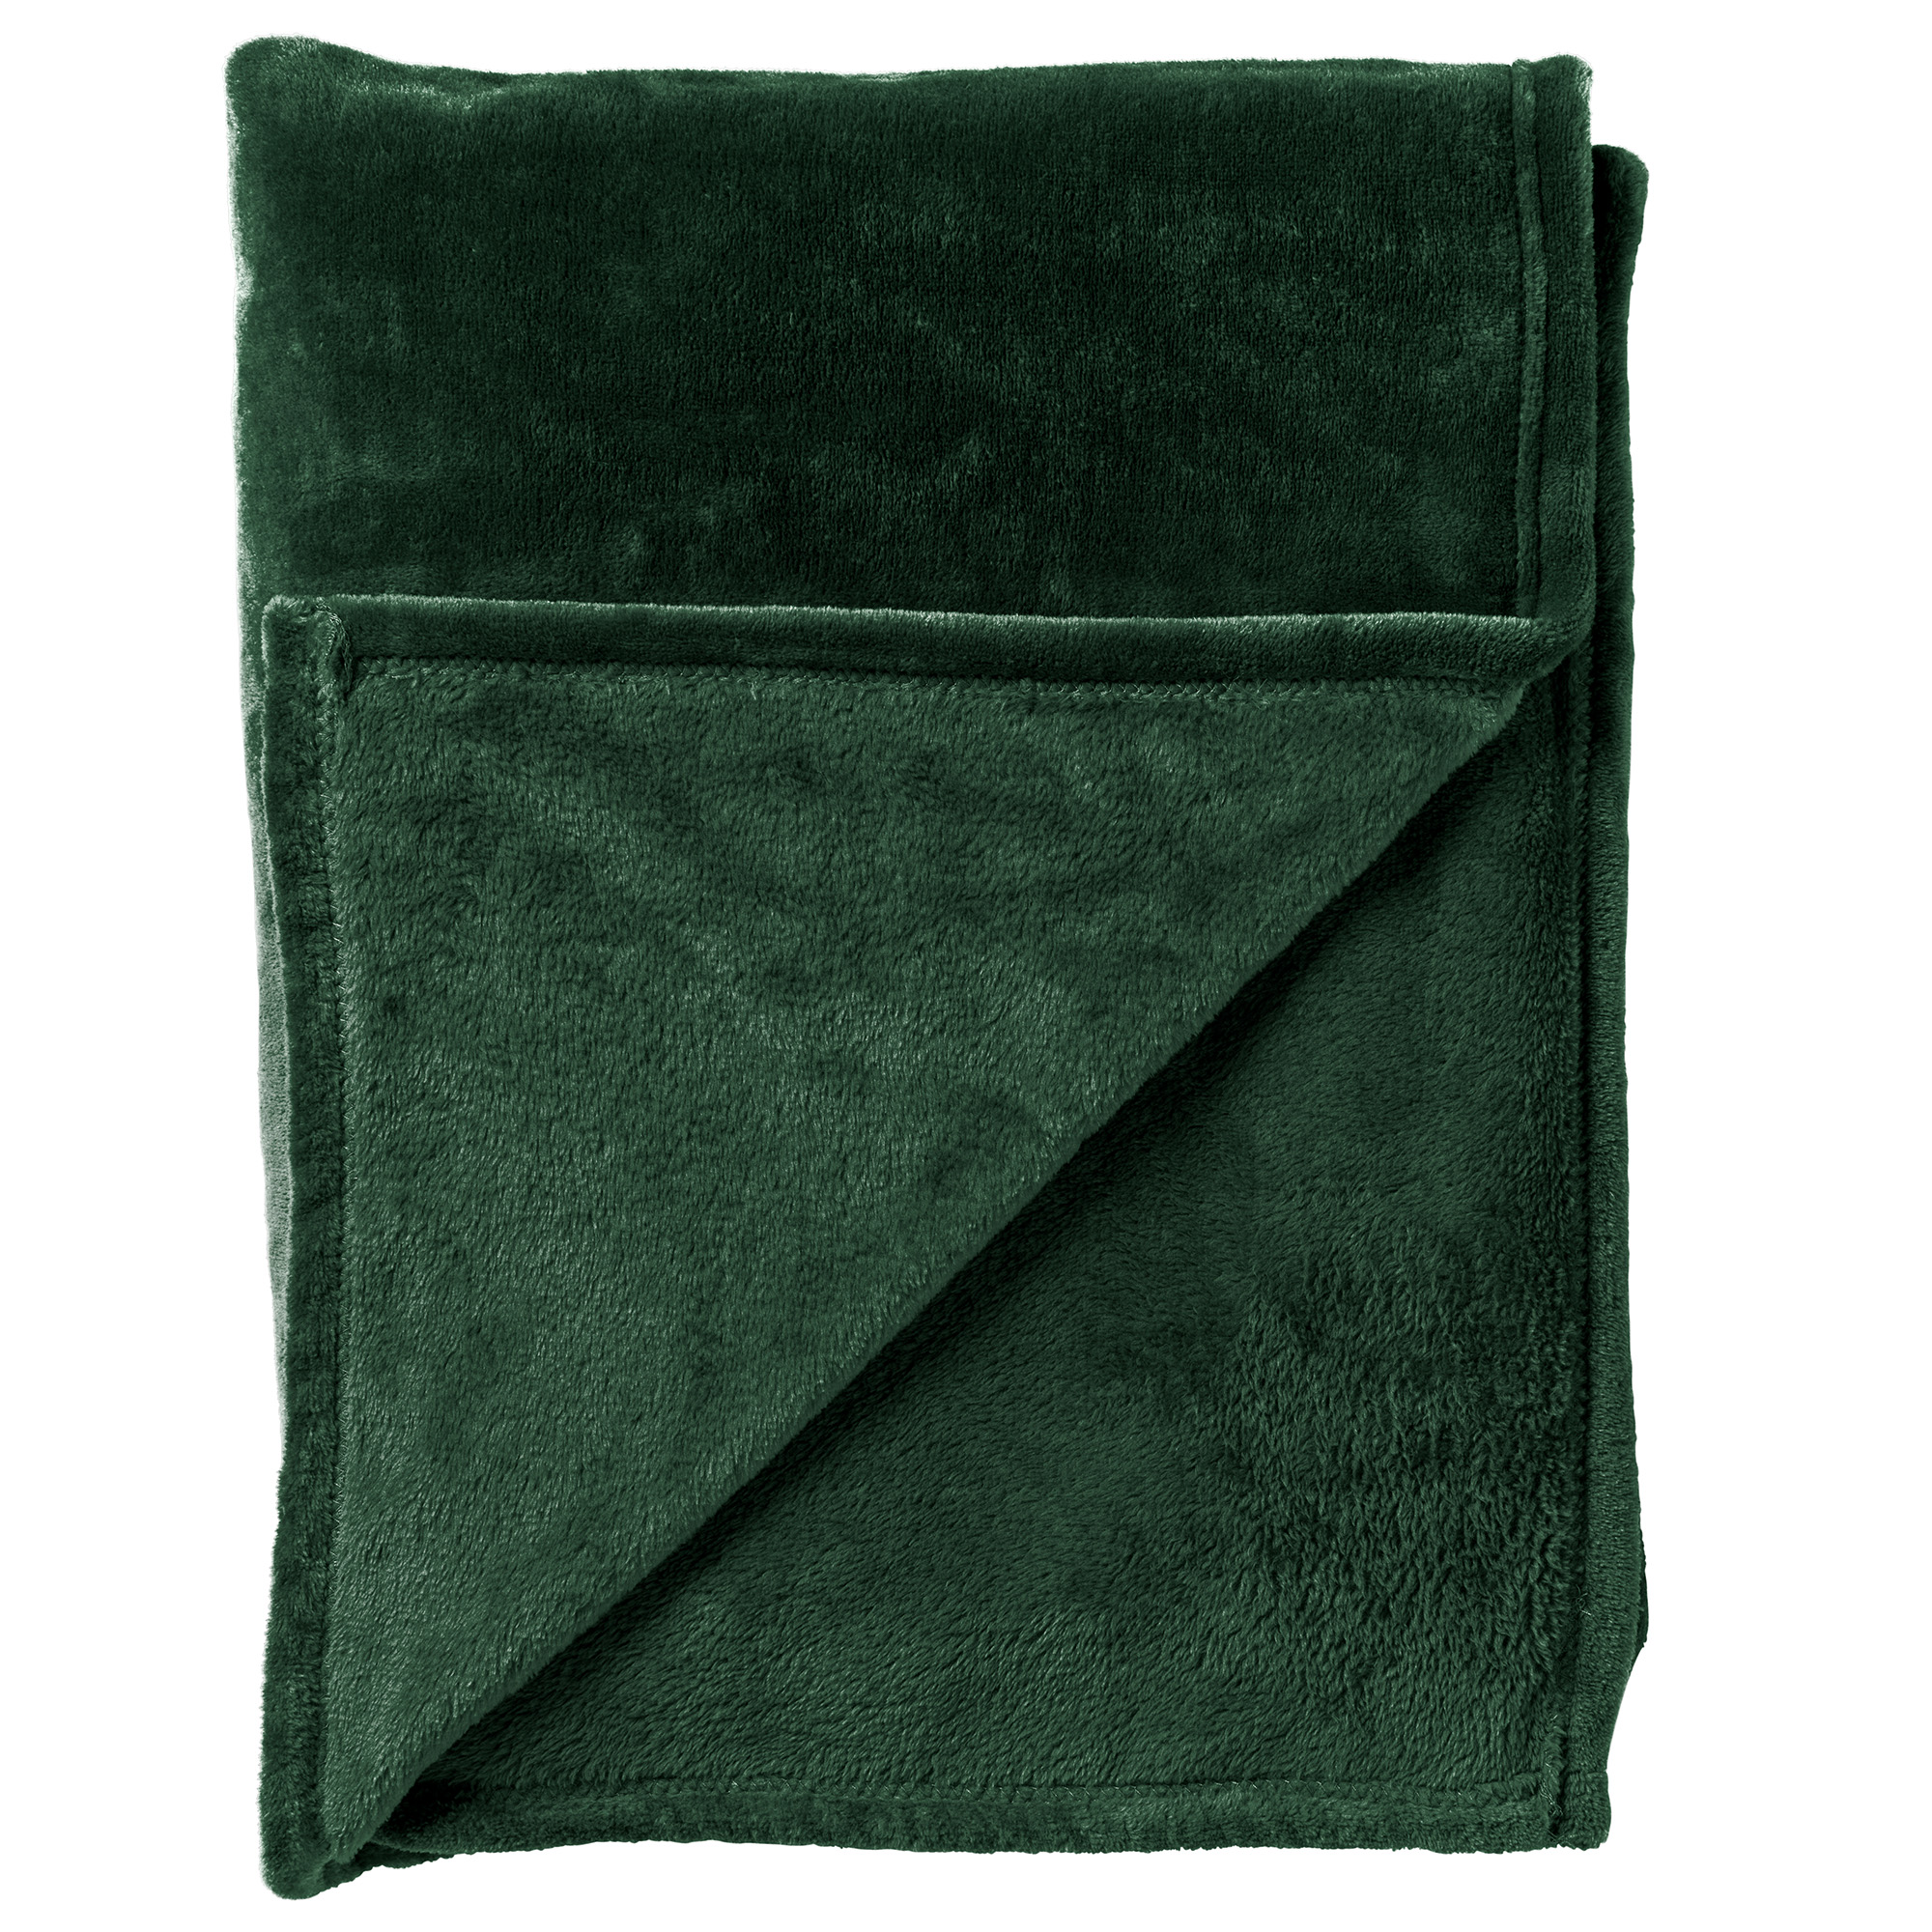 CHARLIE - Plaid flannel fleece XL - 200x220 cm - Mountain View - groen